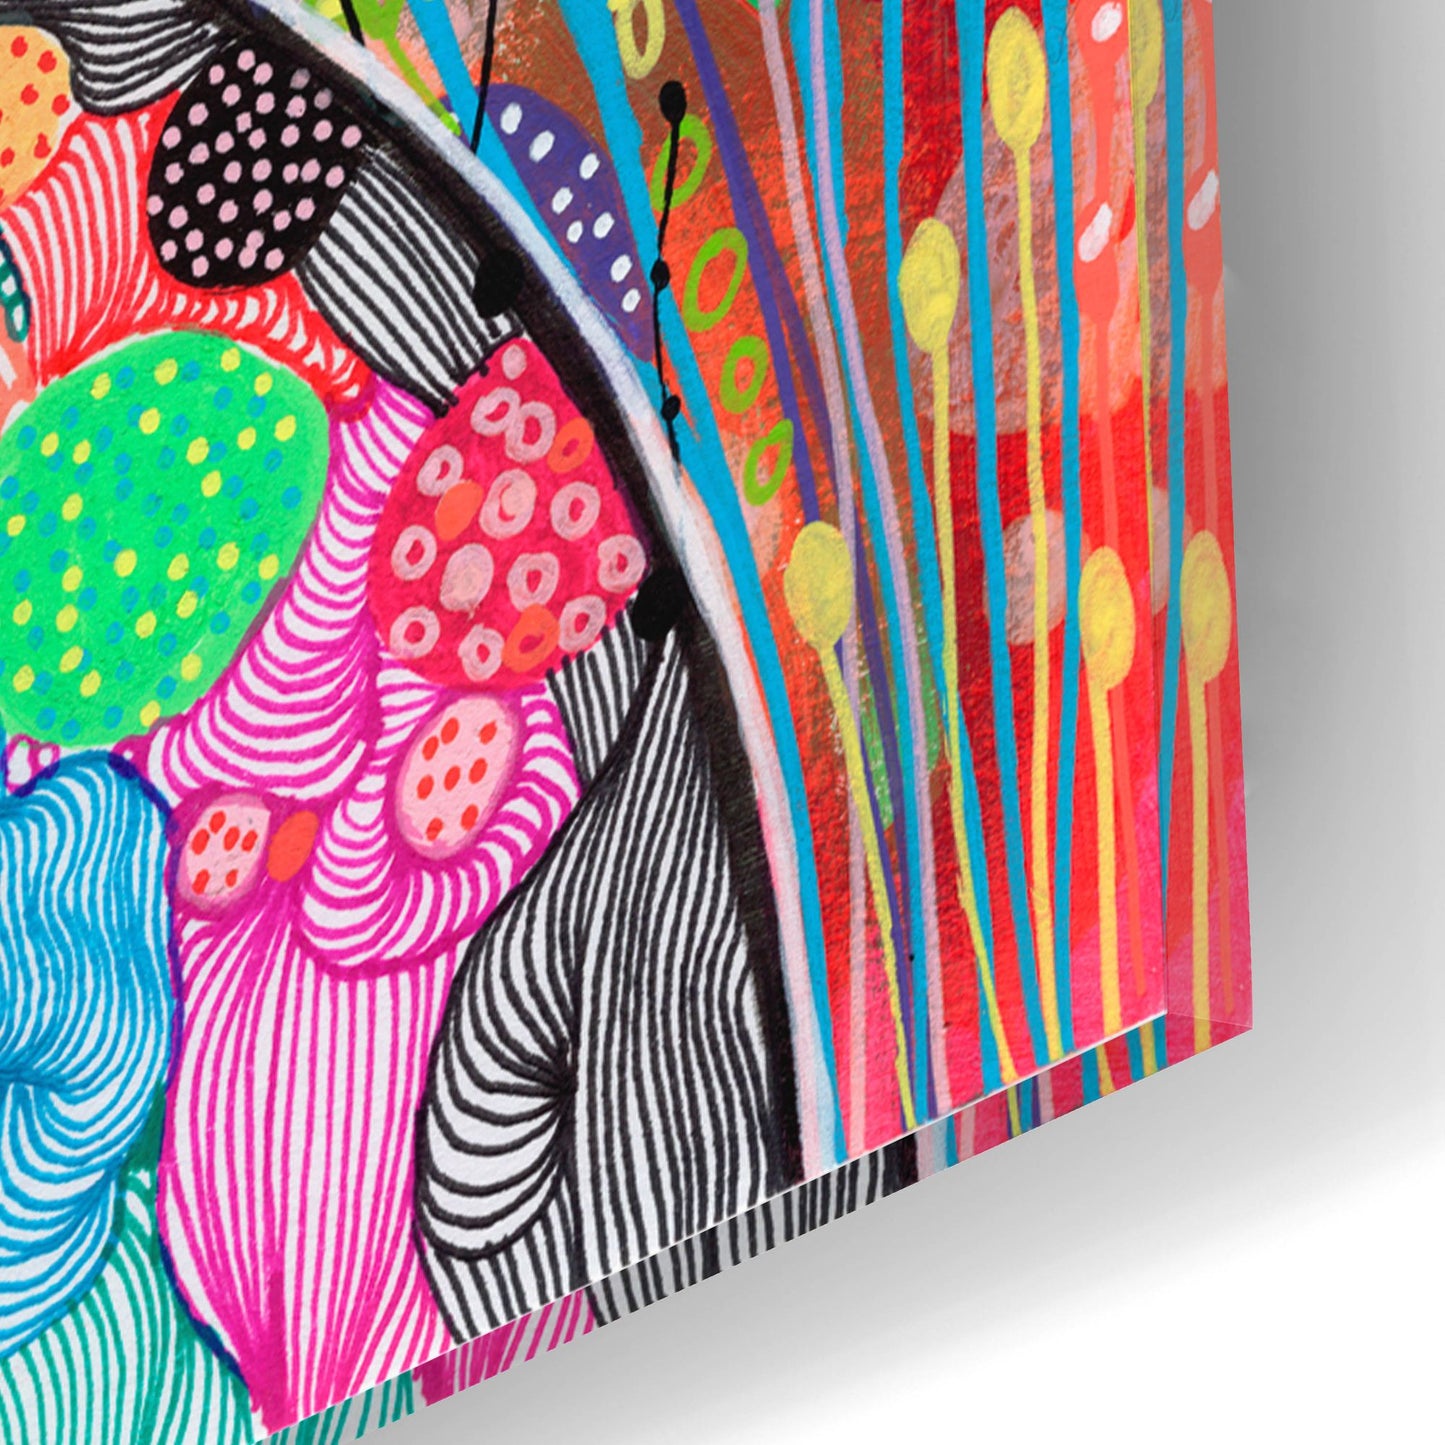 Epic Art 'Rainbow Cat2 by Noemi Ibarz, Acrylic Glass Wall Art,12x16